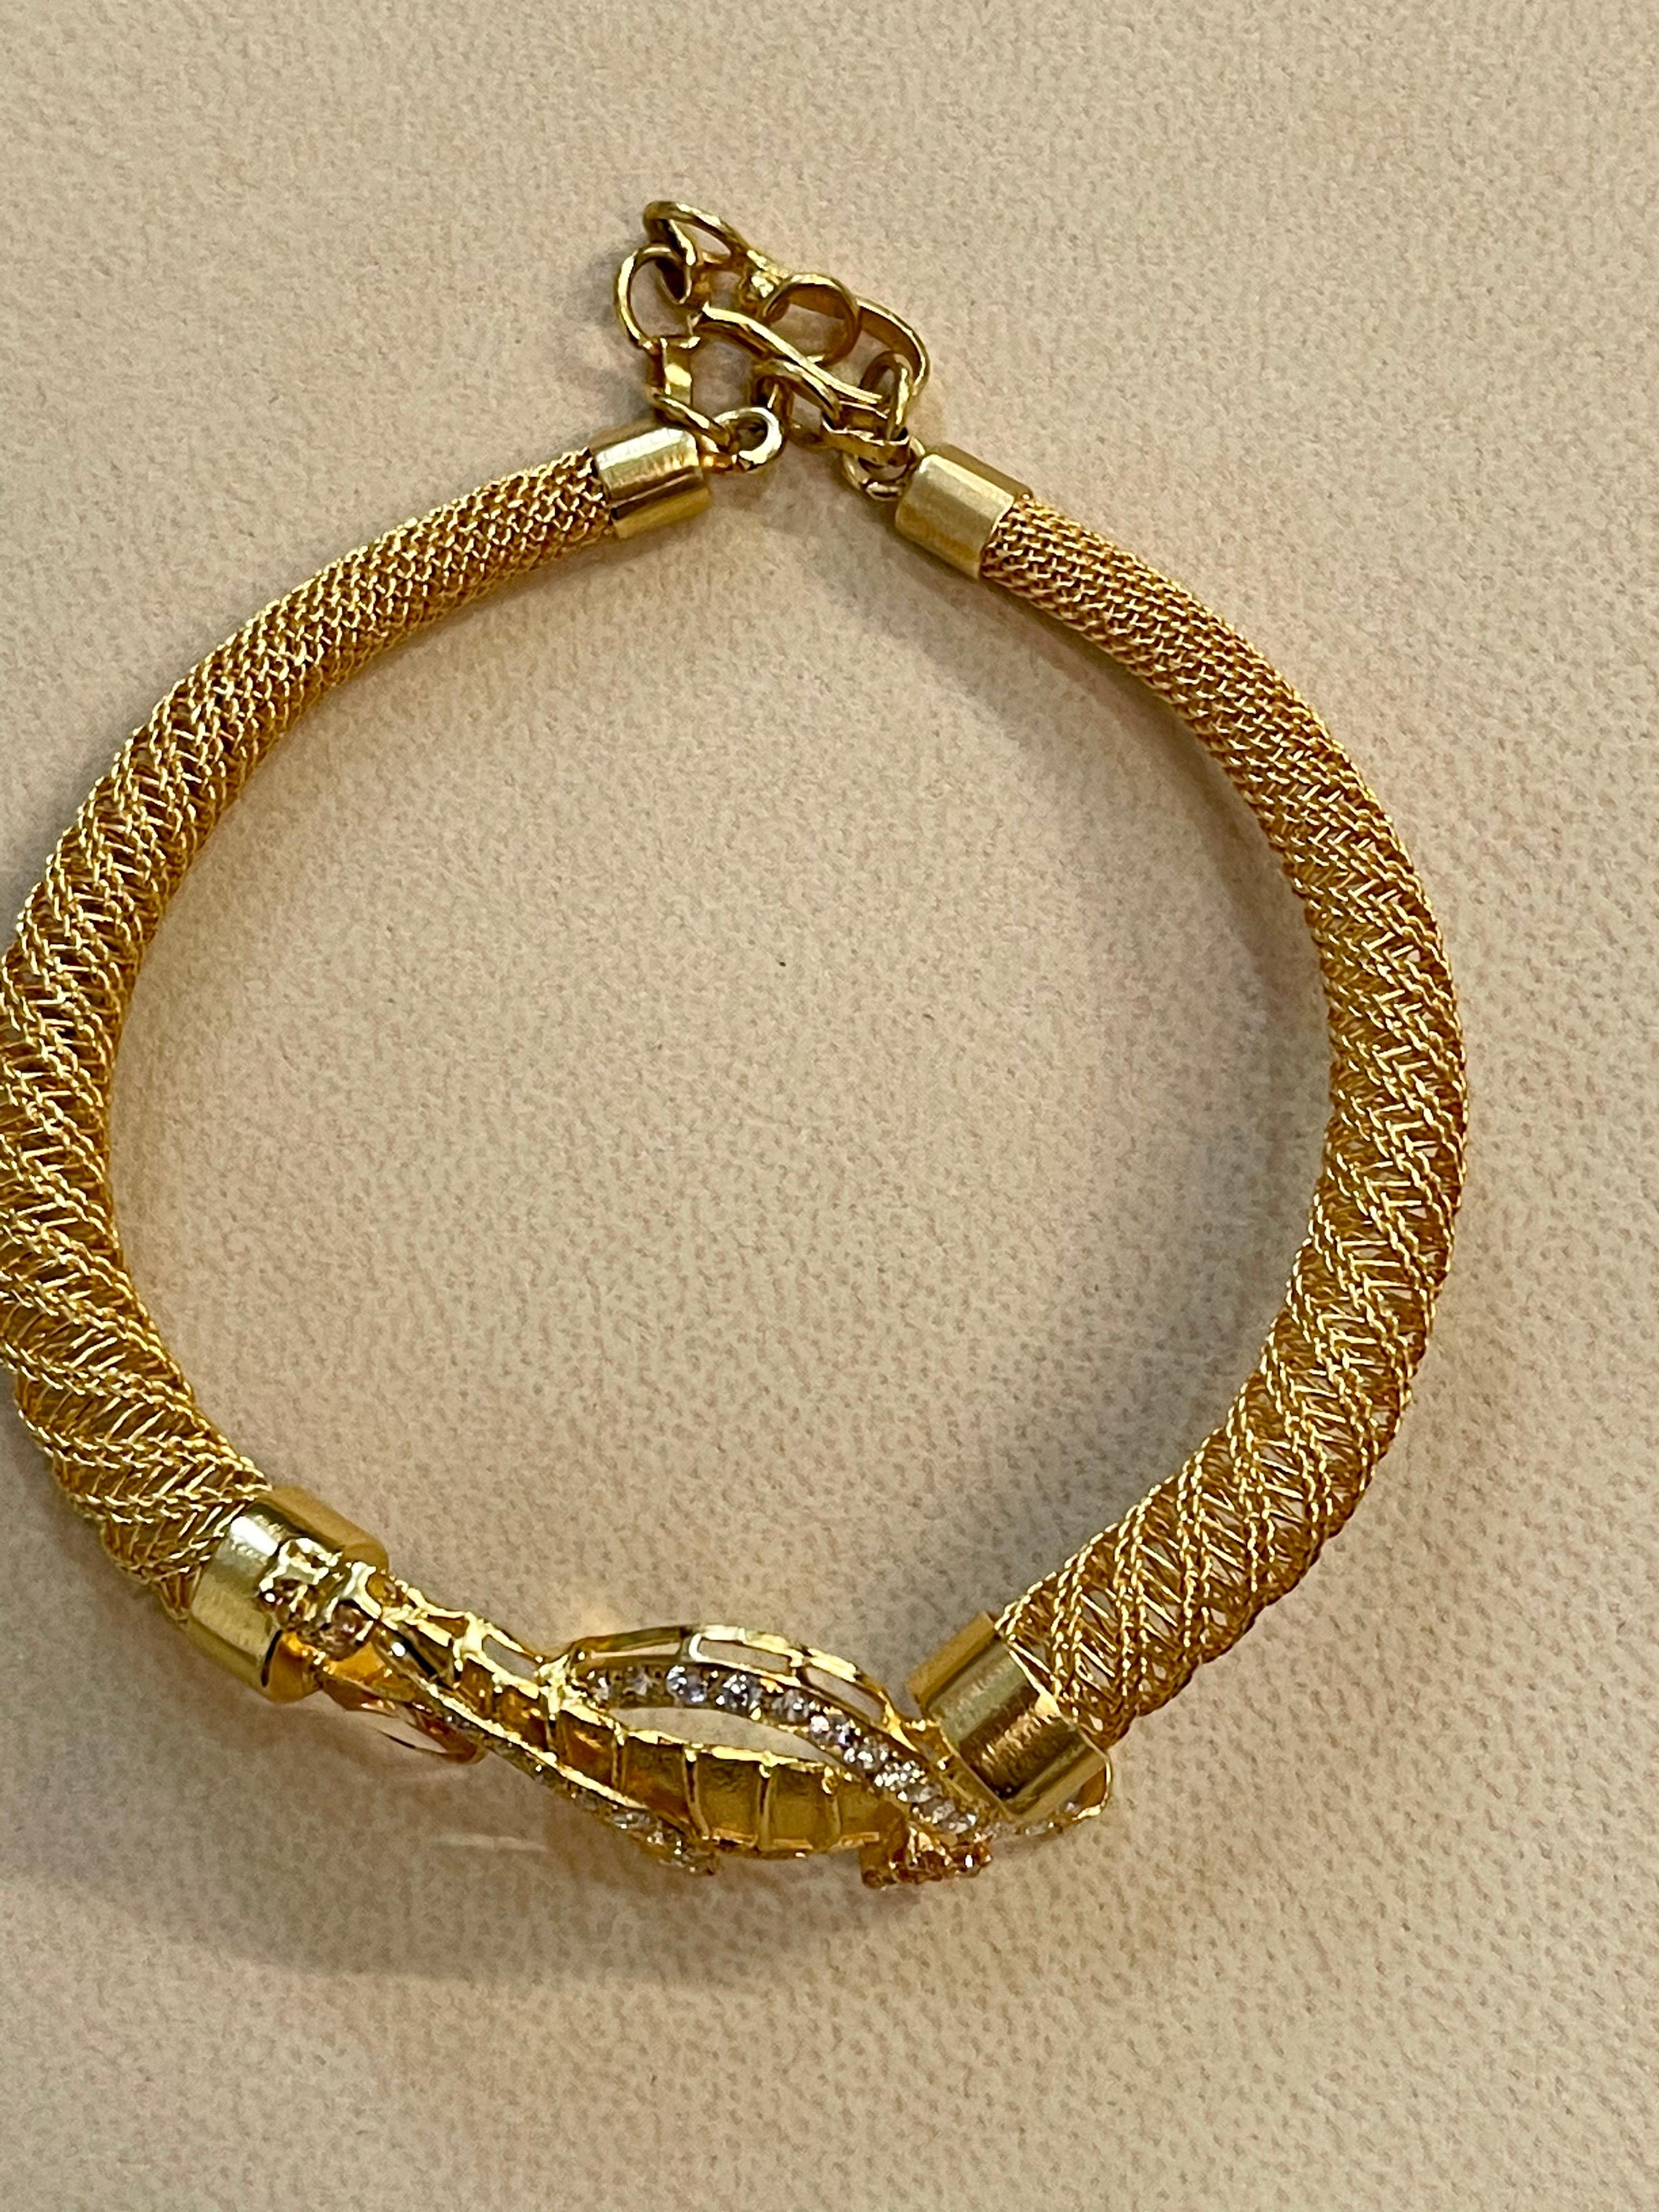 Yellow Sapphire and Diamond Bangle or Bracelet in 22 Karat Yellow Gold 20.8 Gram 5